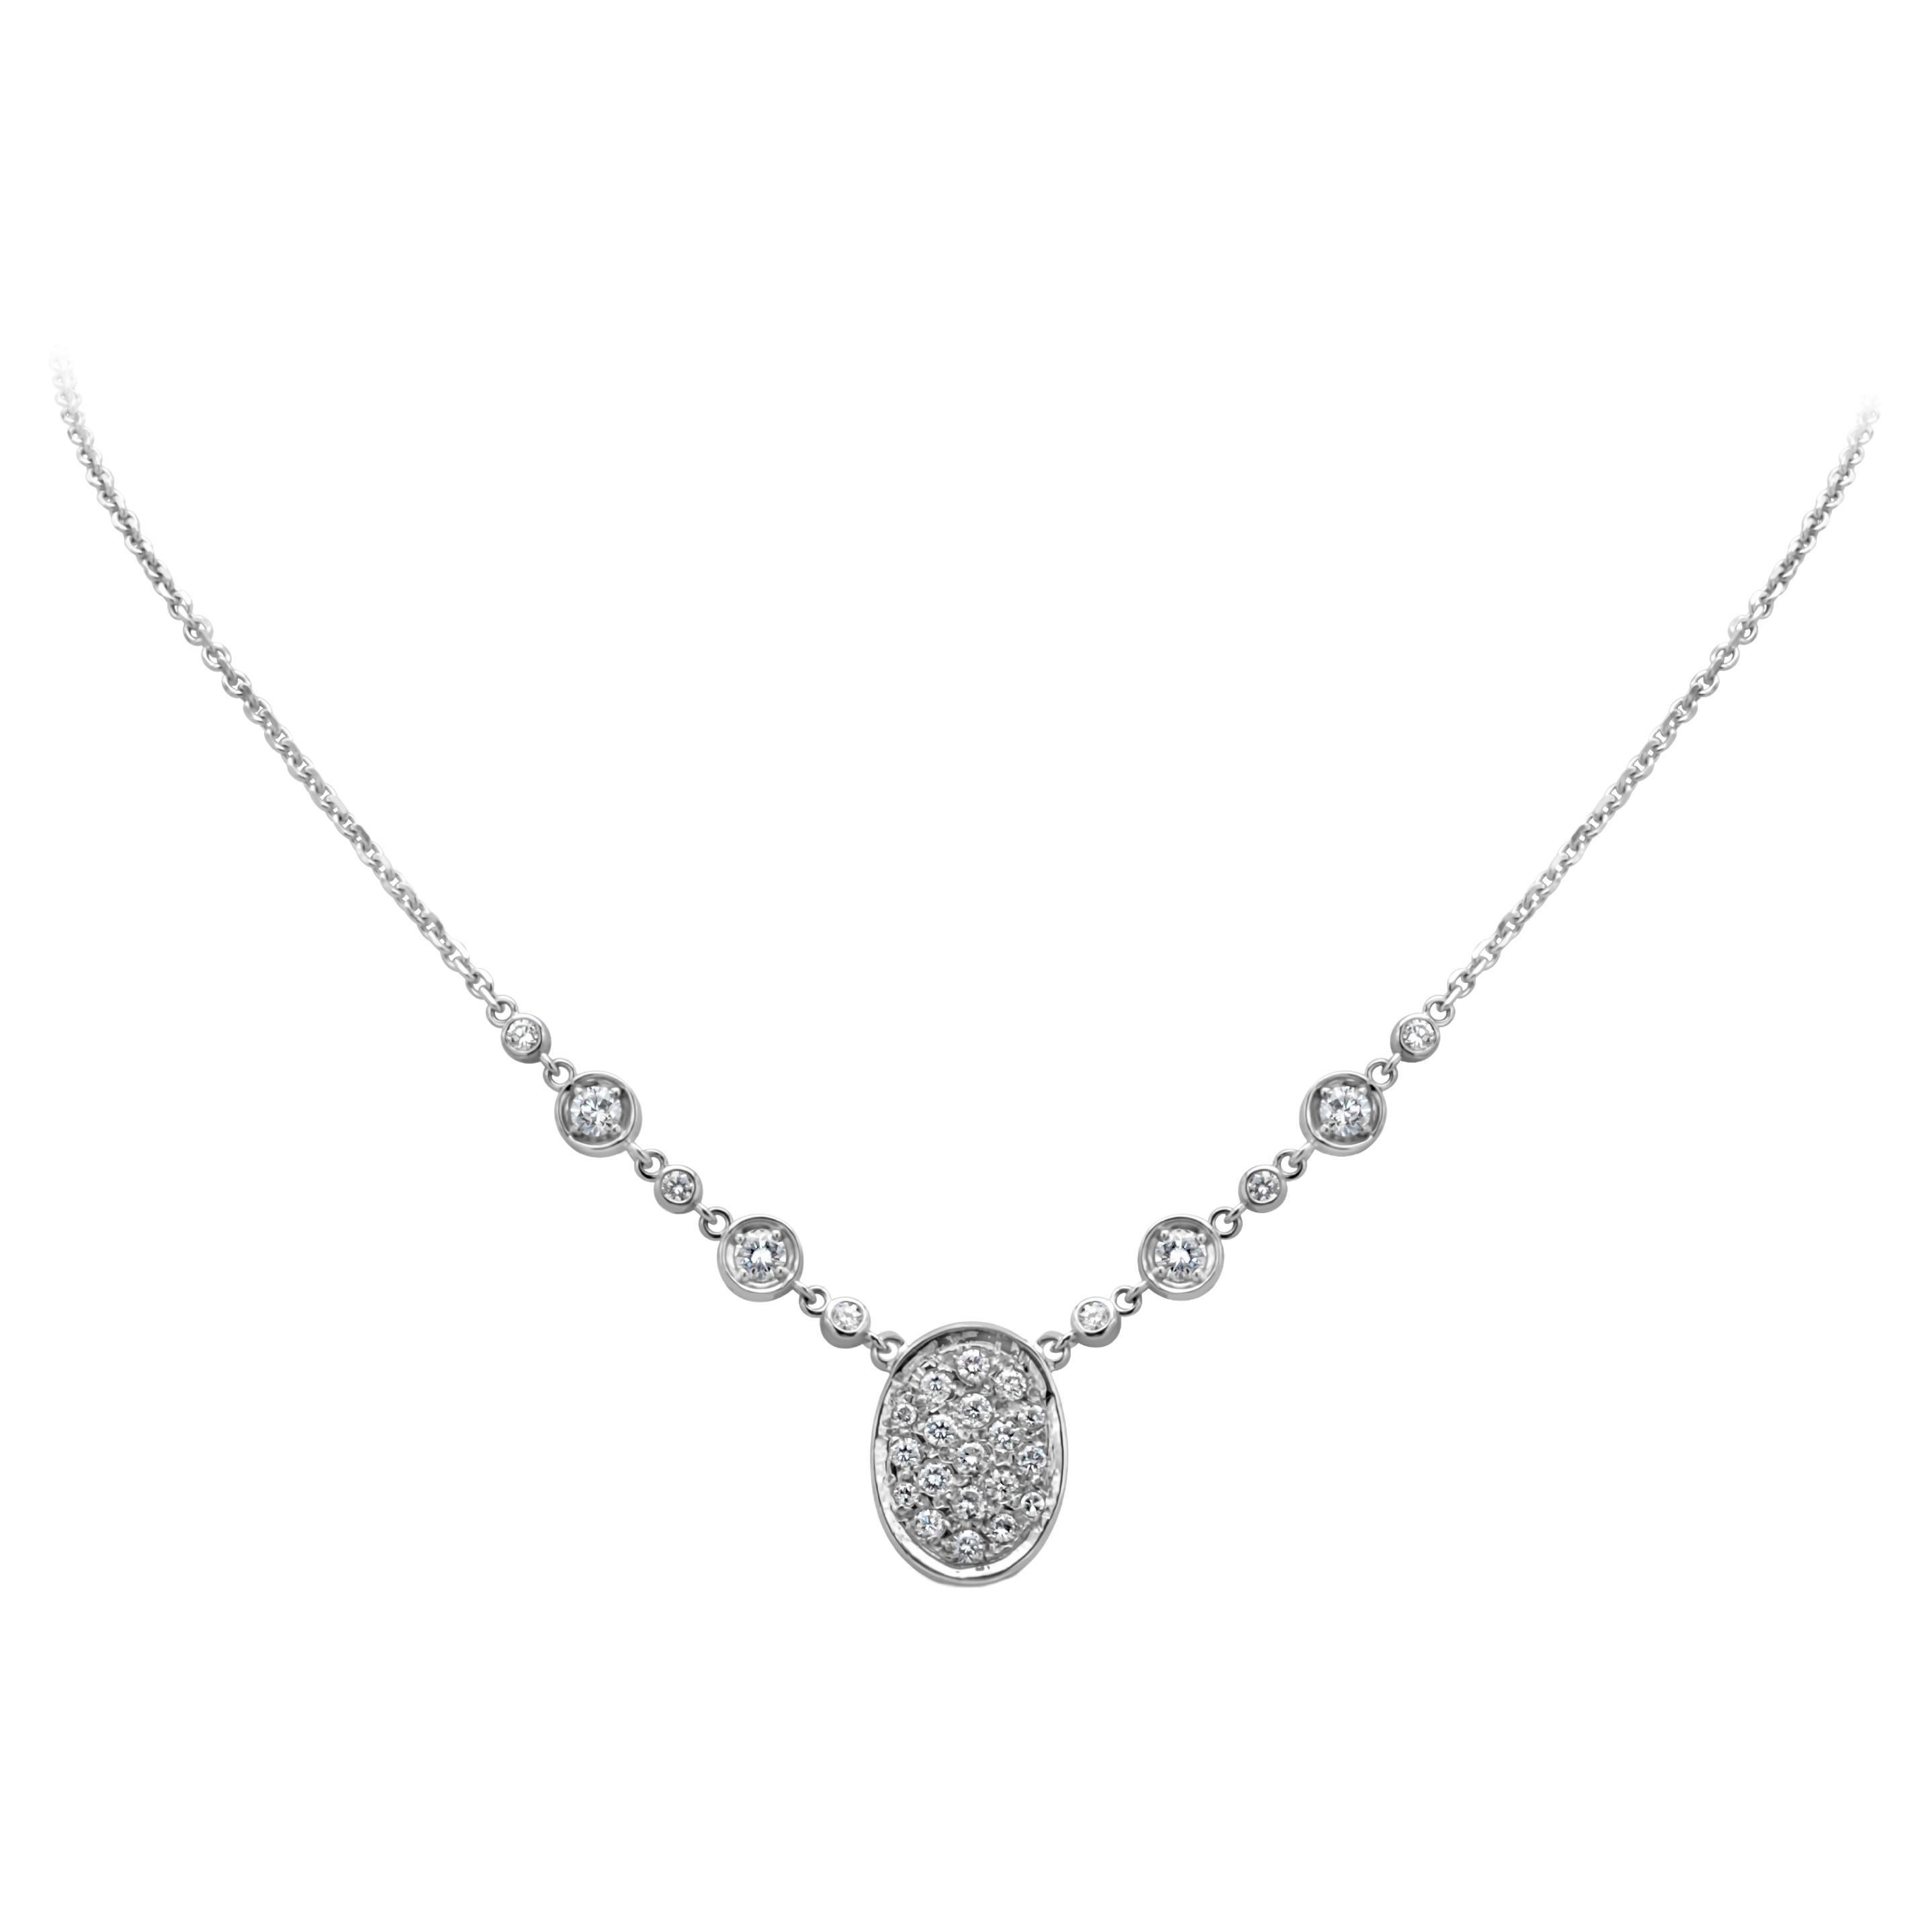 Collier de mode avec pendentif en diamant de 1,24 carats (taille ronde) en vente